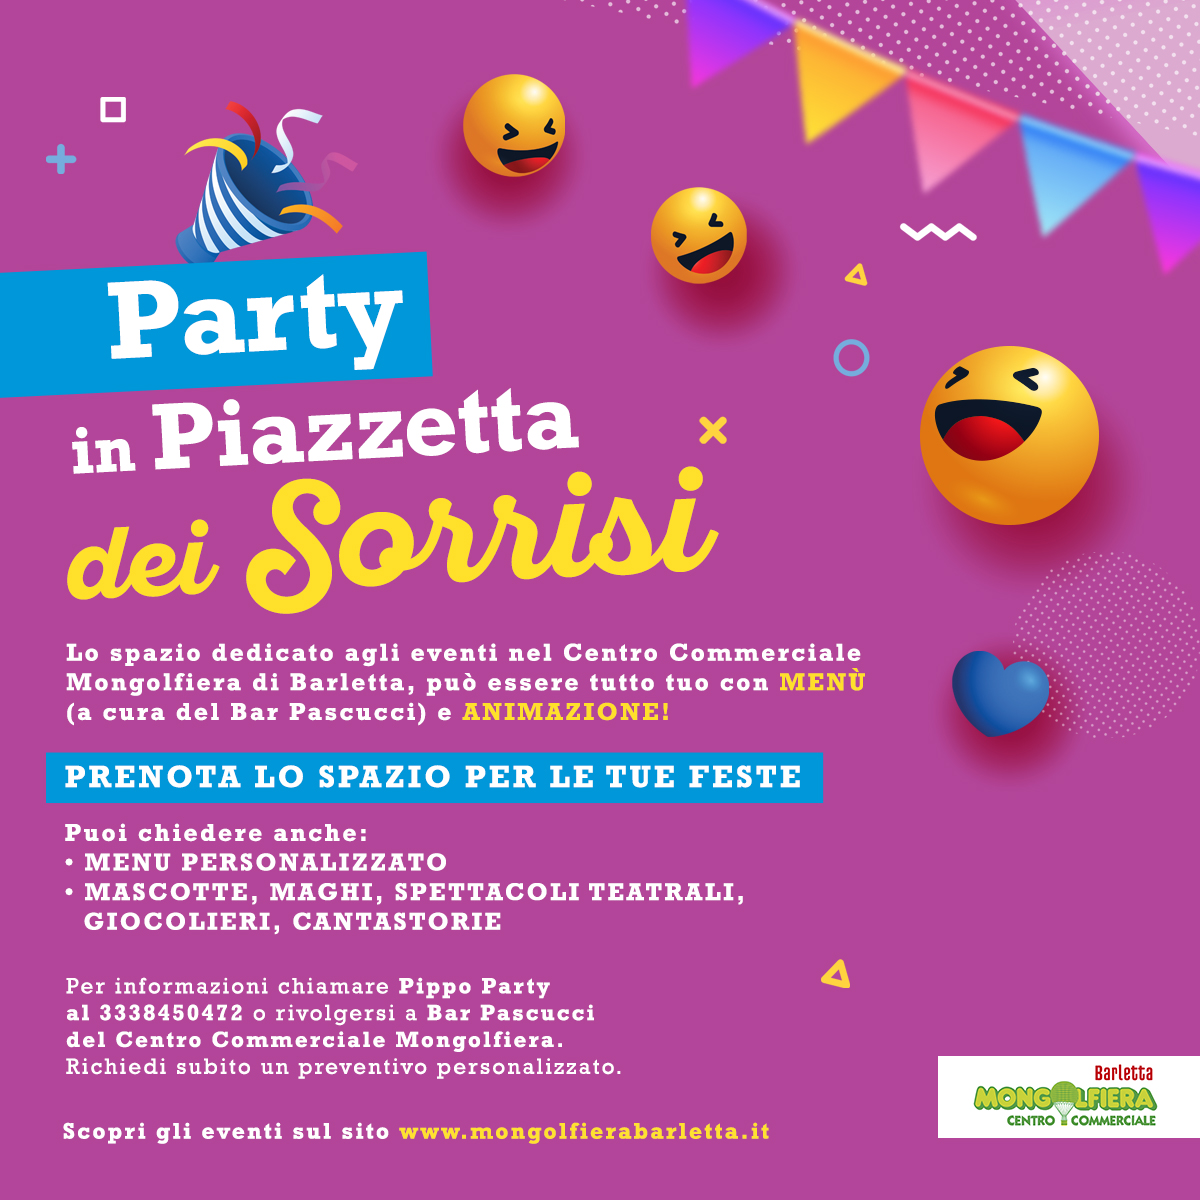 Party in Piazzetta dei Sorrisi